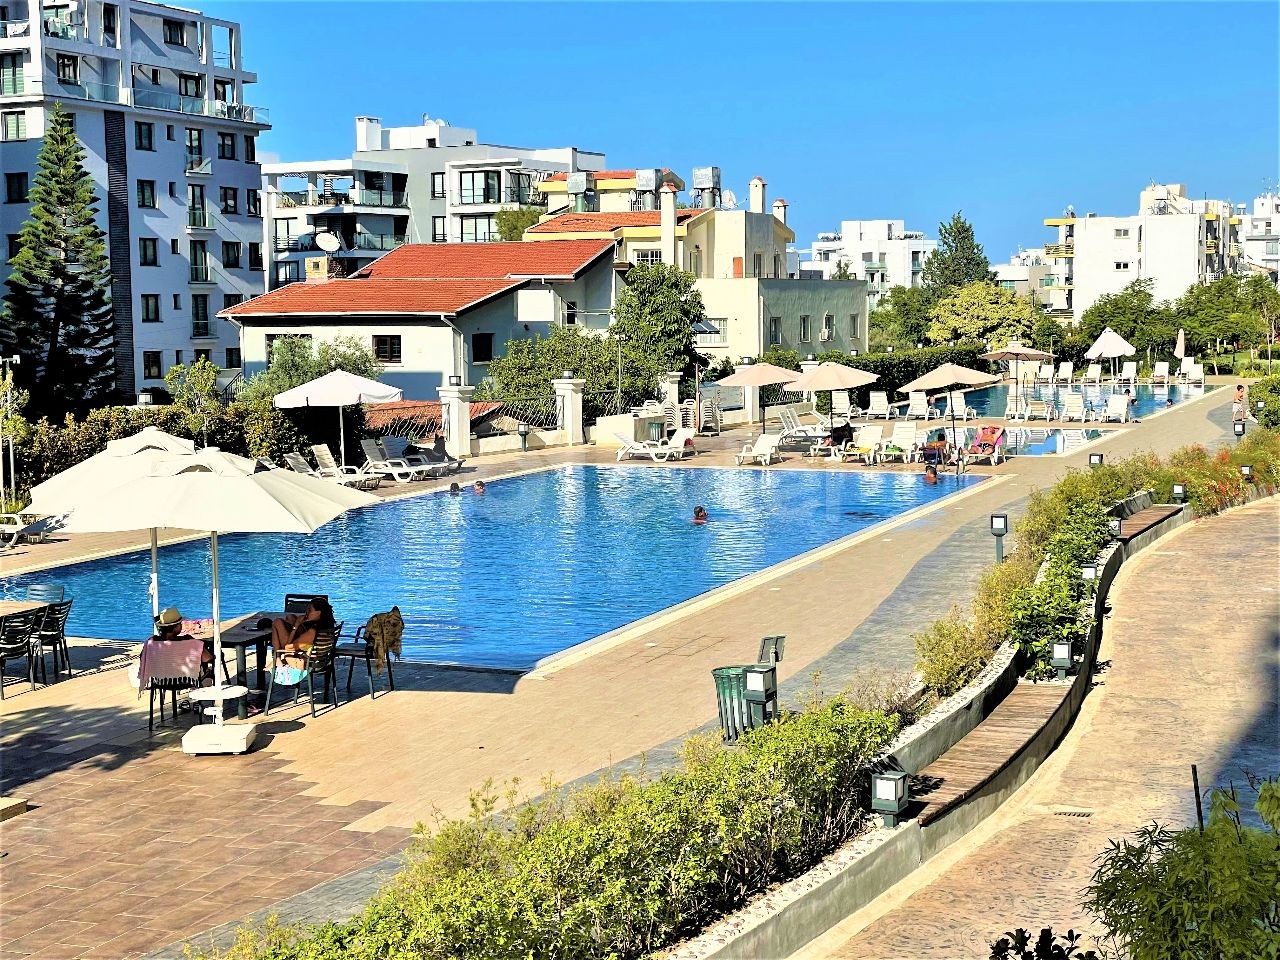 Квартира с видом на море продается в резиденции в центре Кирении ** 